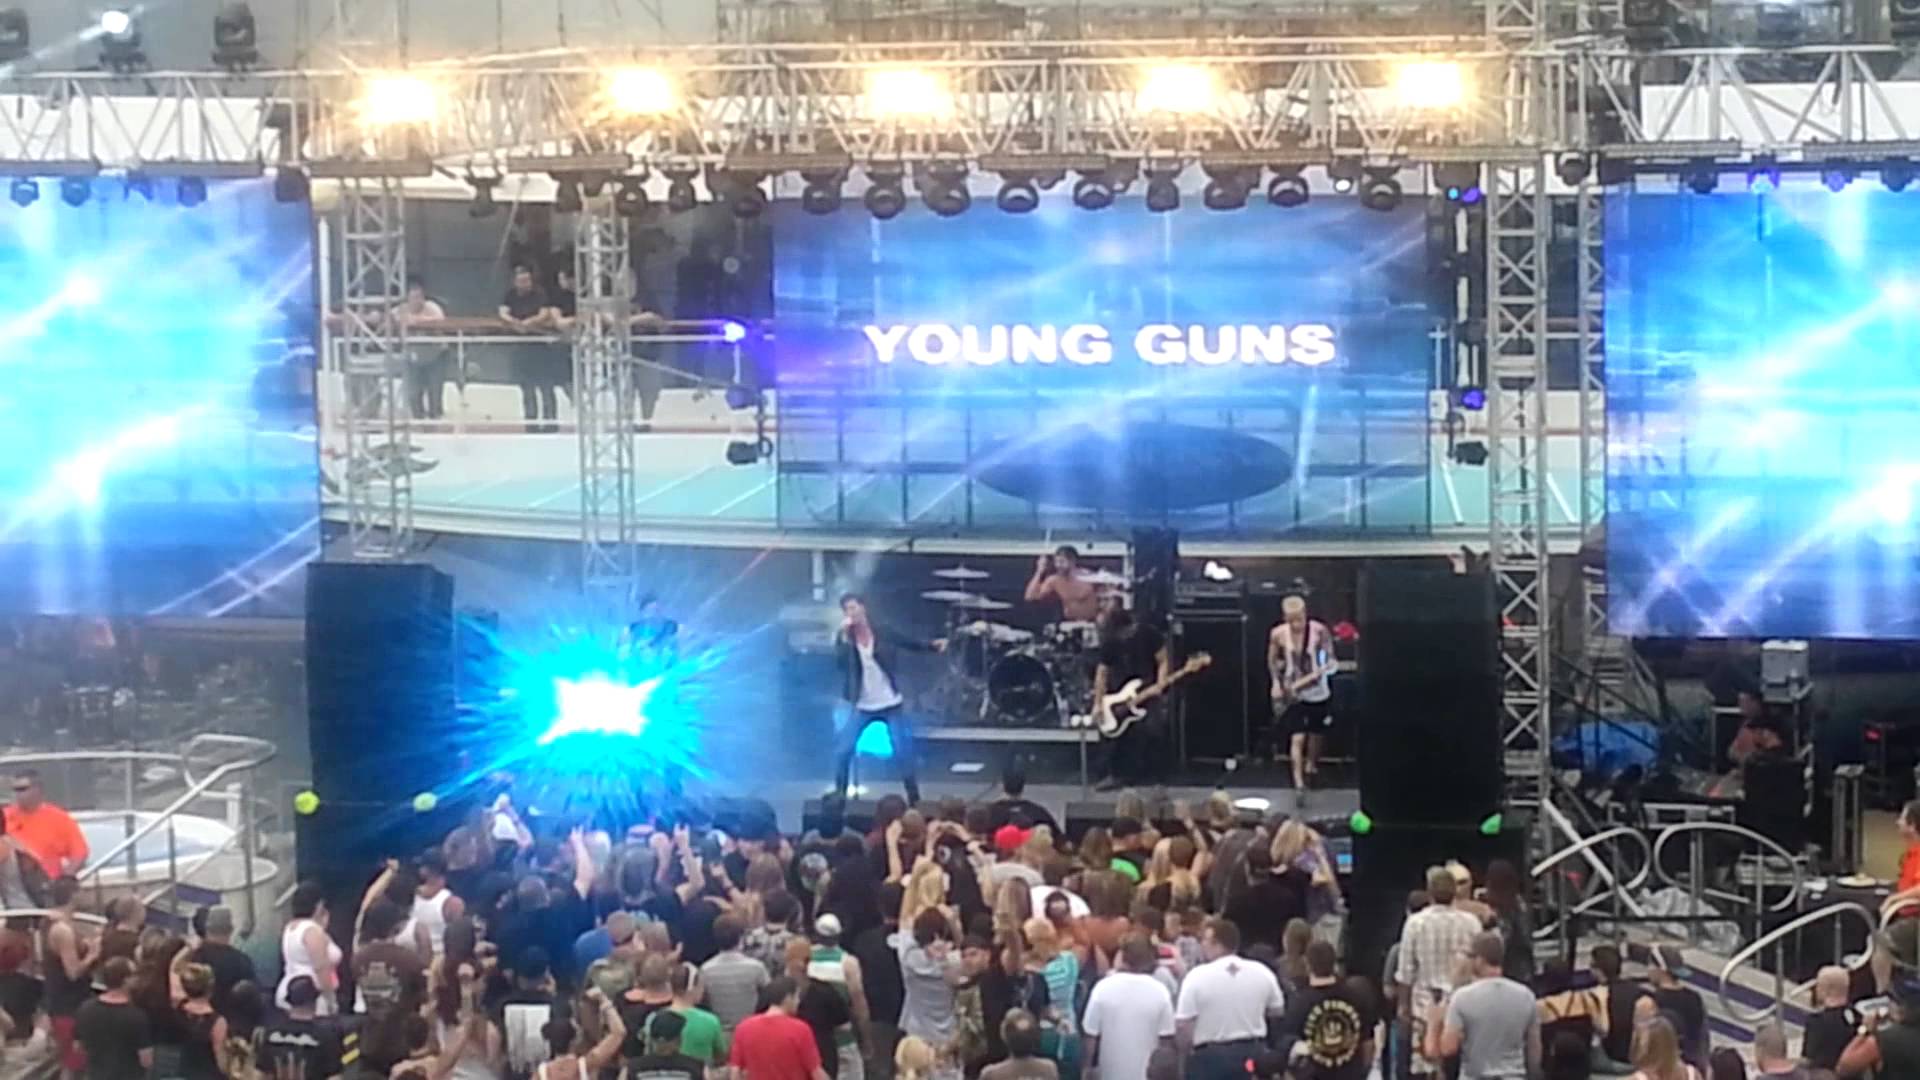 Young Guns - Shiprocked 2014, live music